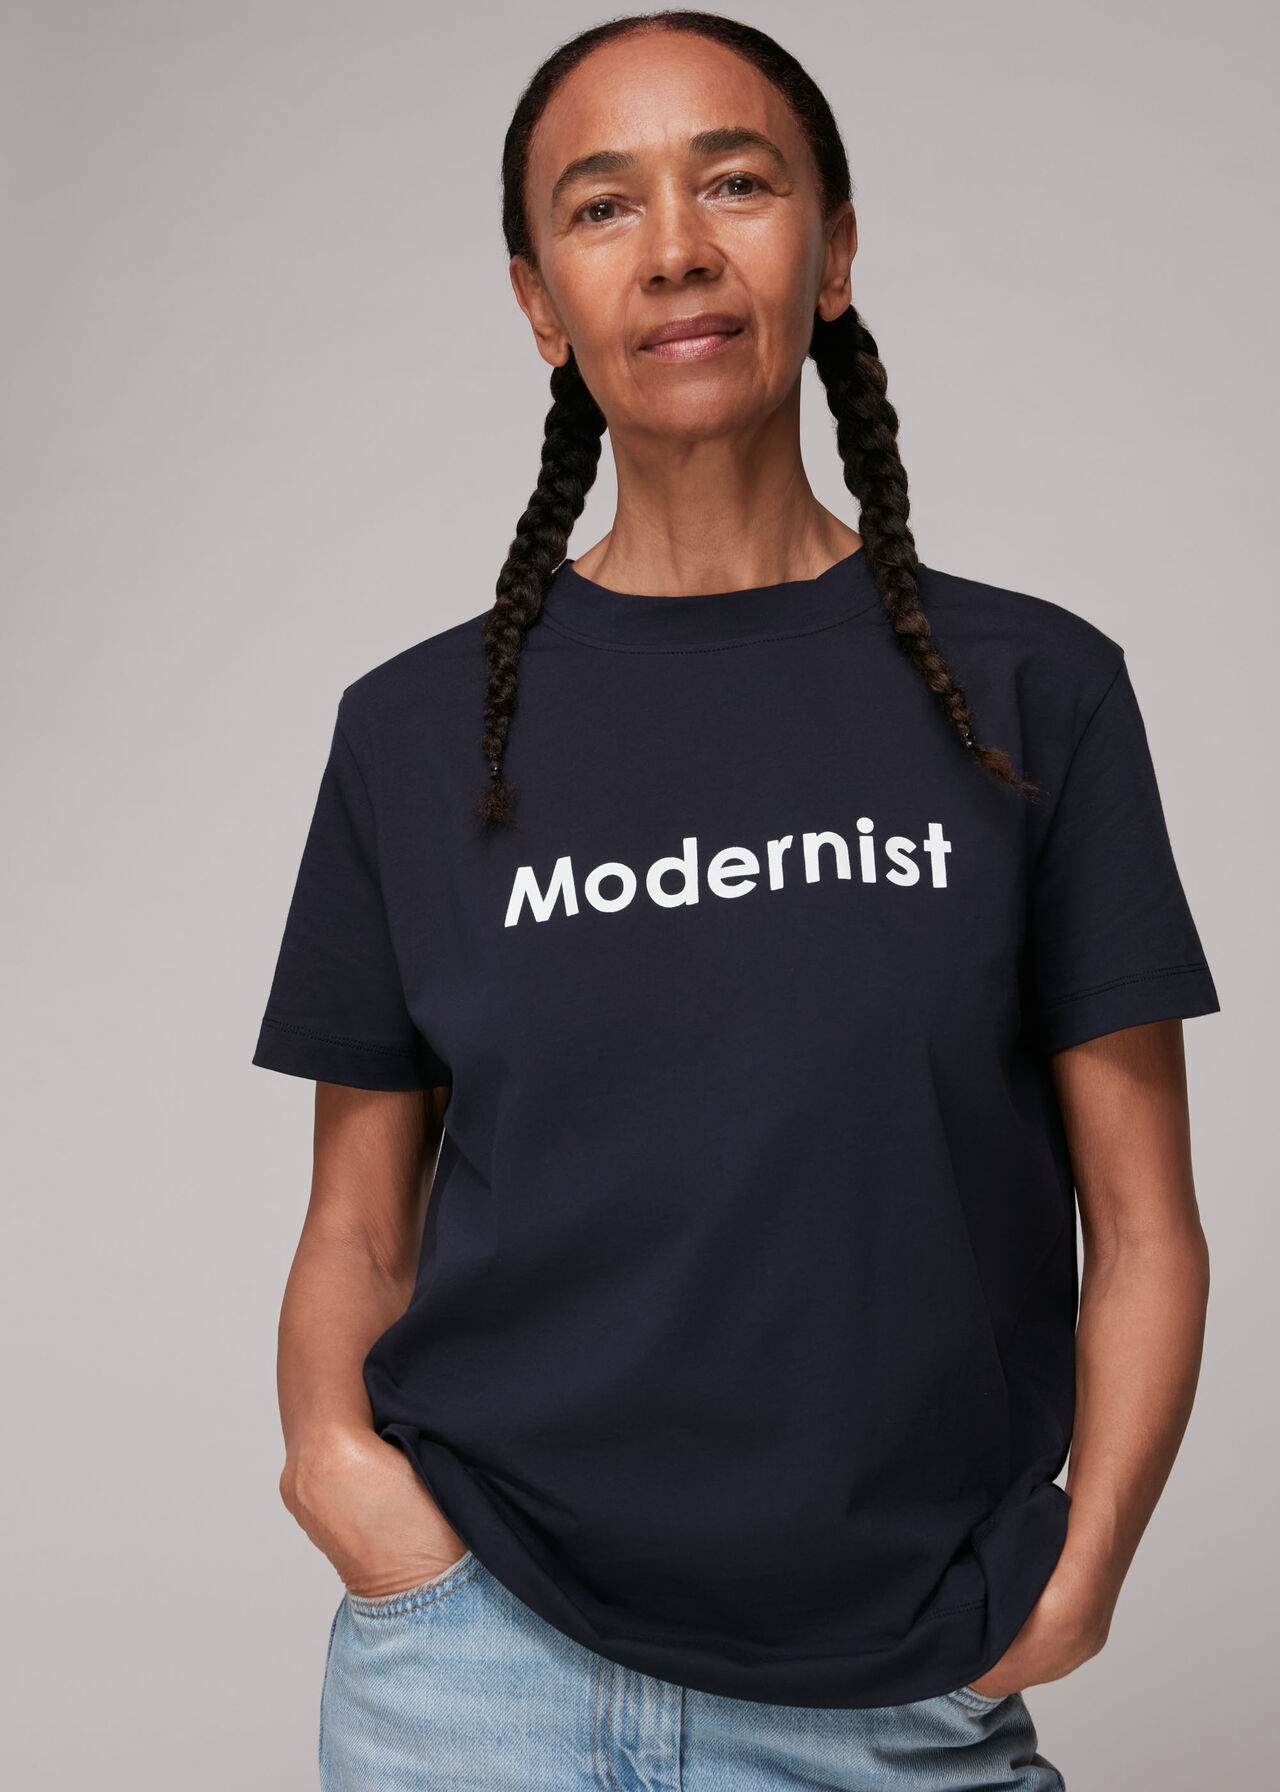 Modernist Logo Tshirt